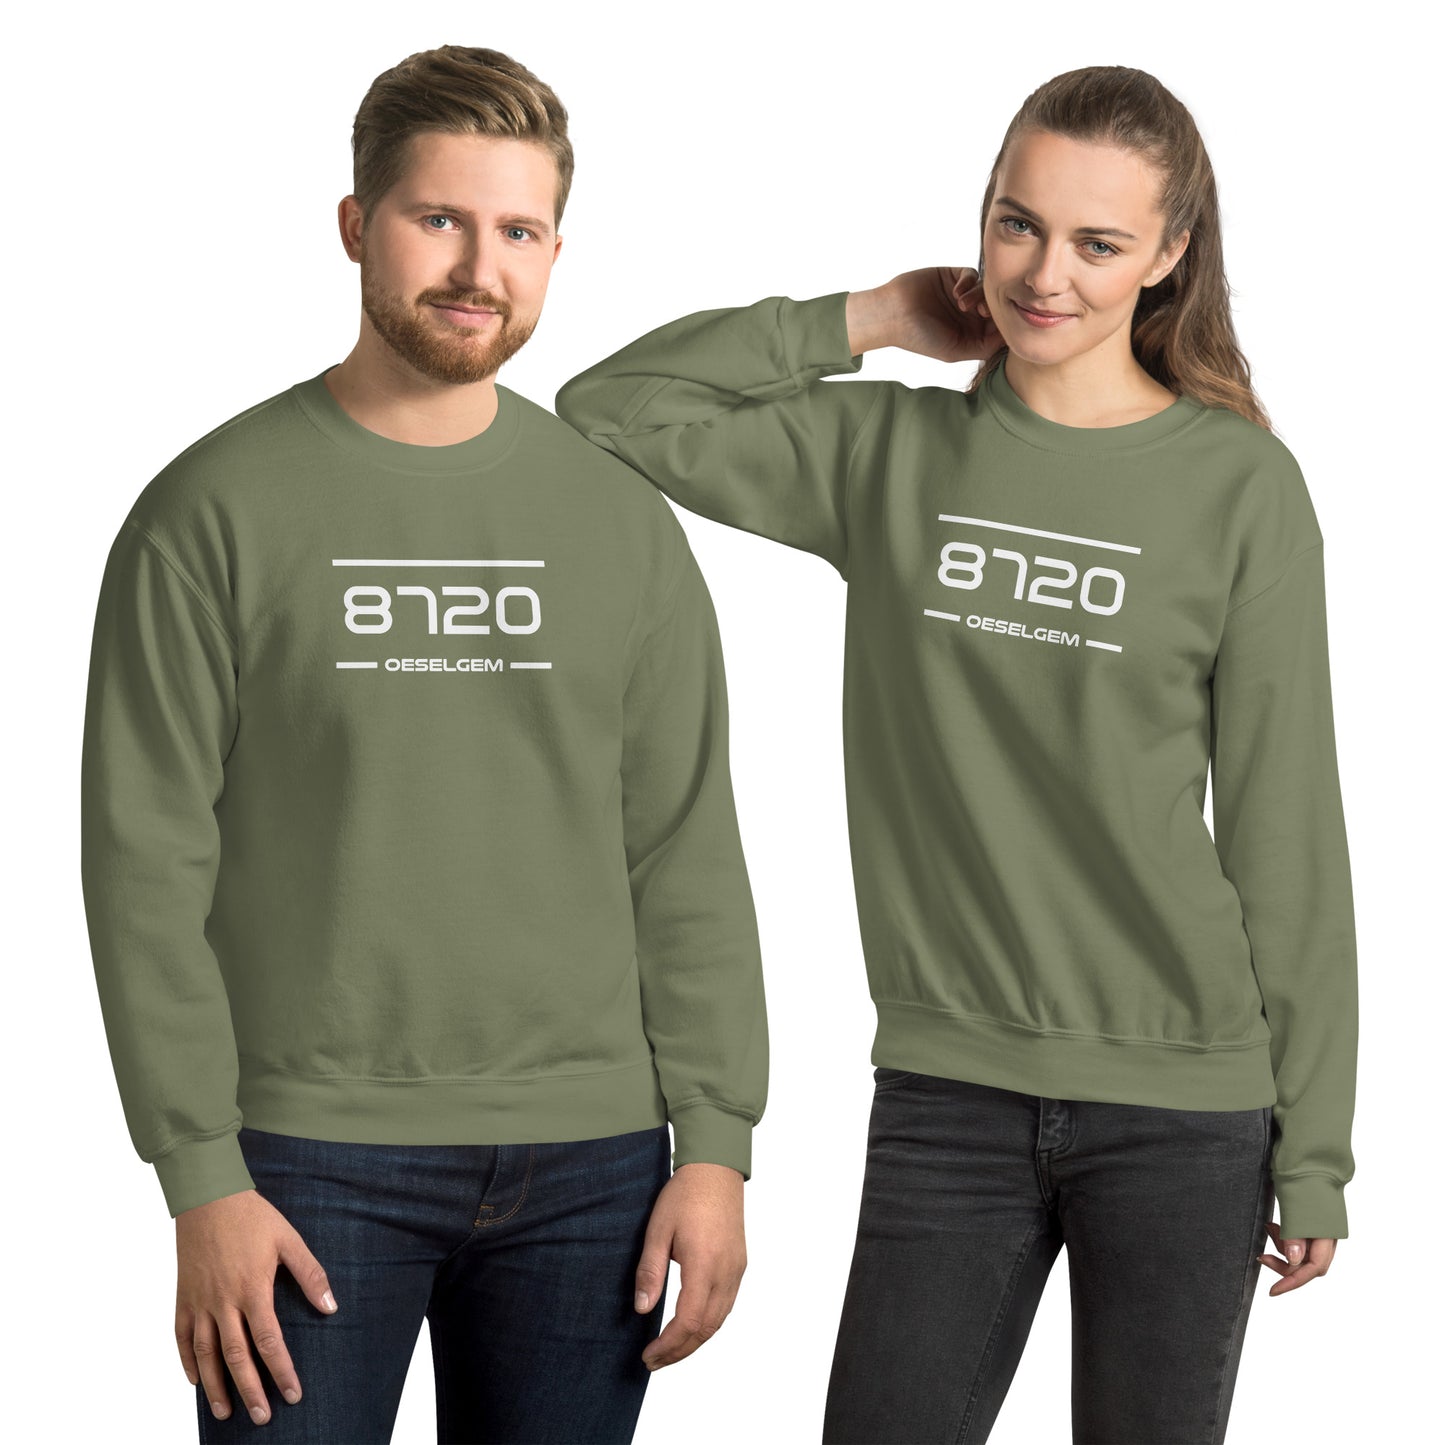 Sweater - 8720 - Oeselgem (M/V)